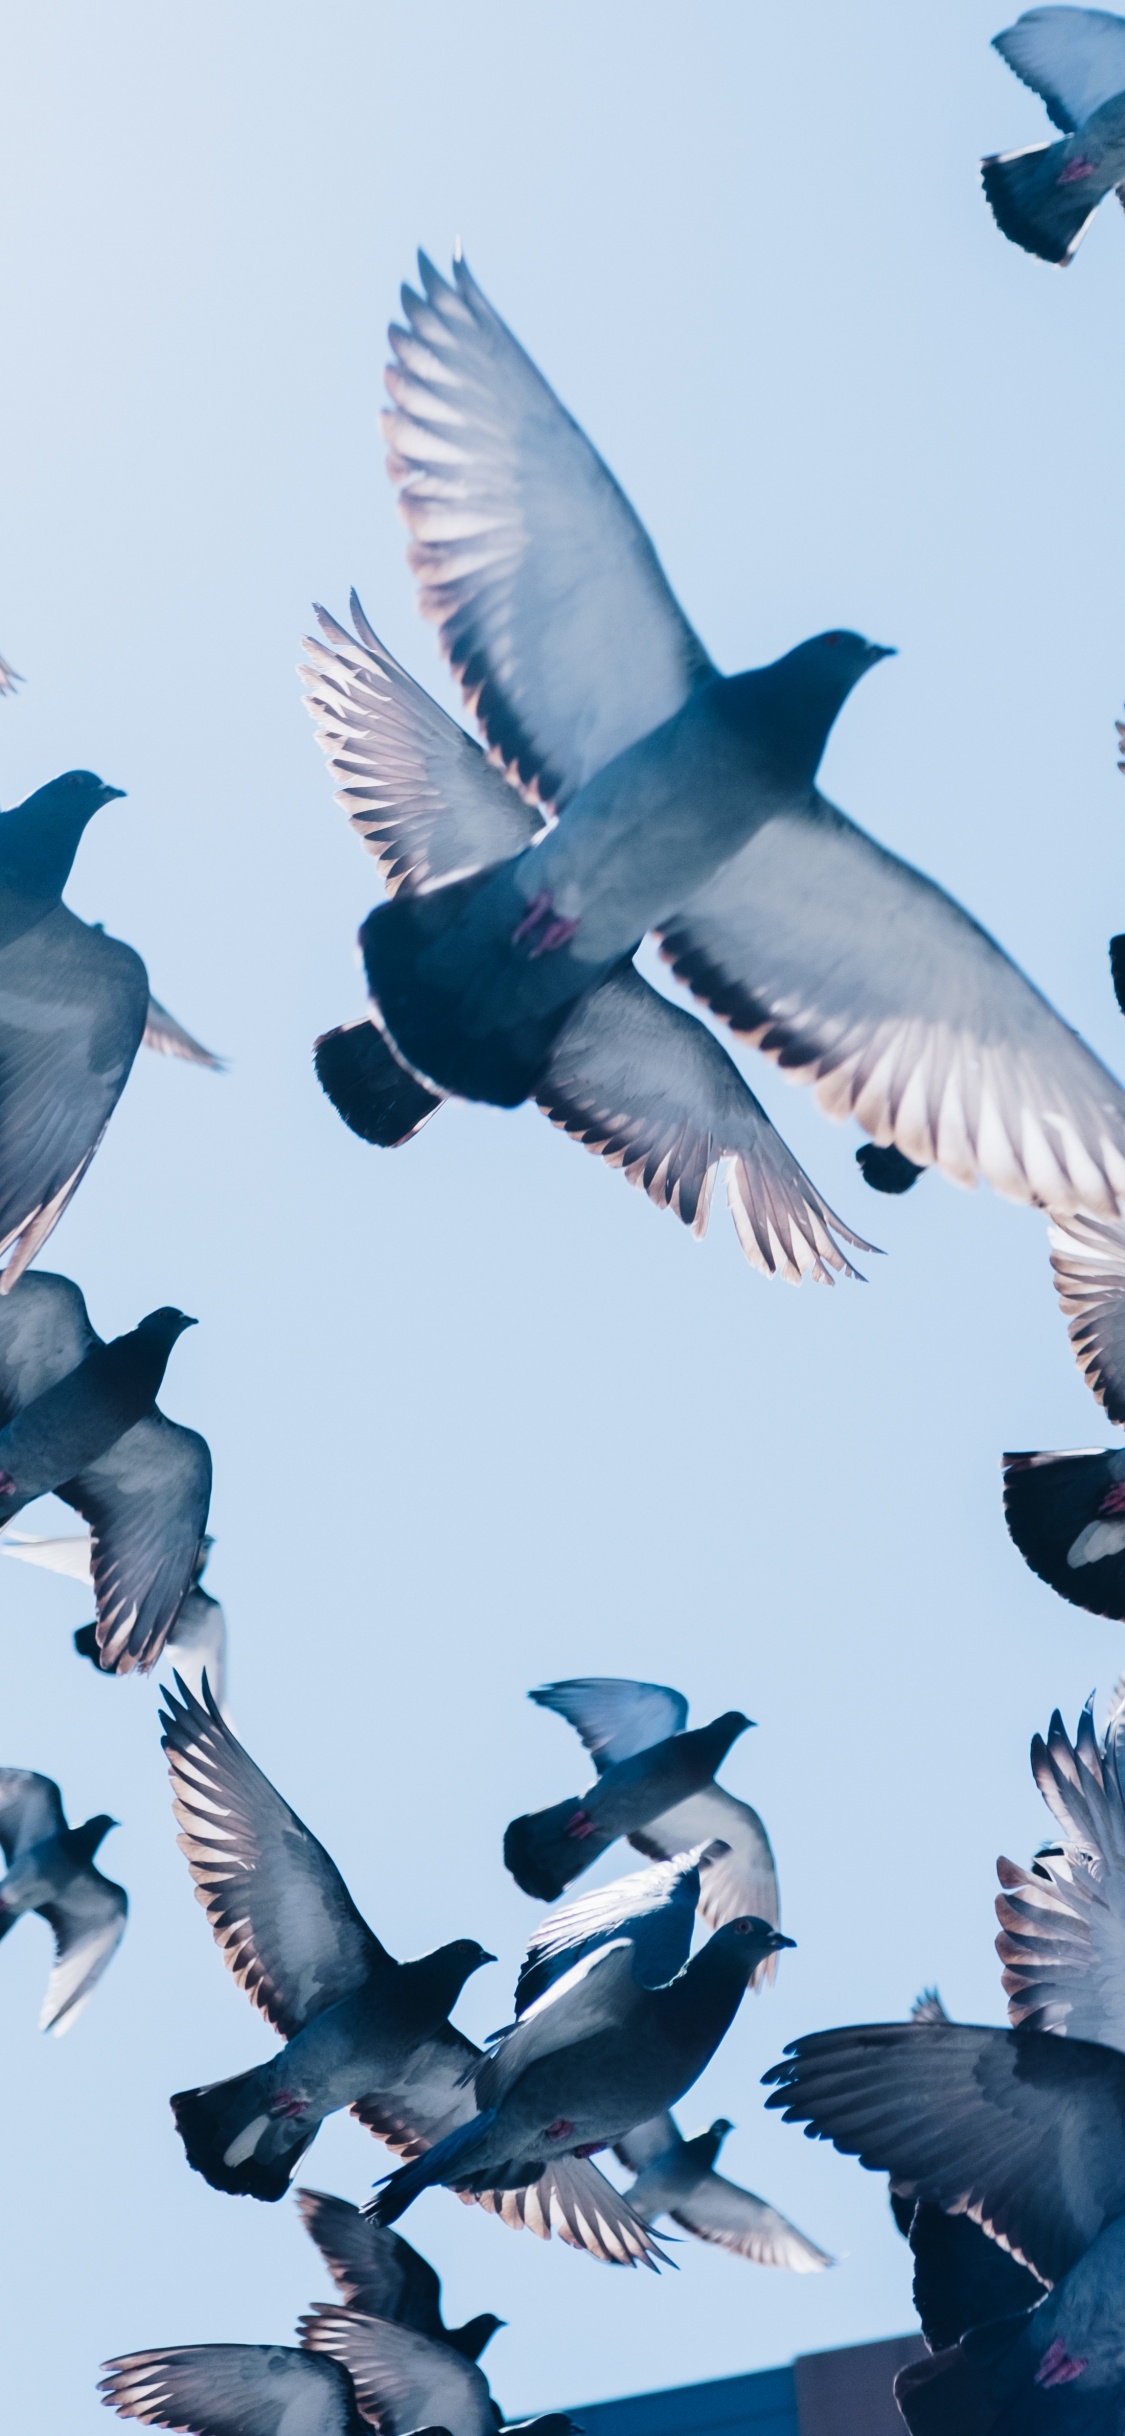 Flock of Birds Flying Under Blue Sky During Daytime. Wallpaper in 1125x2436 Resolution